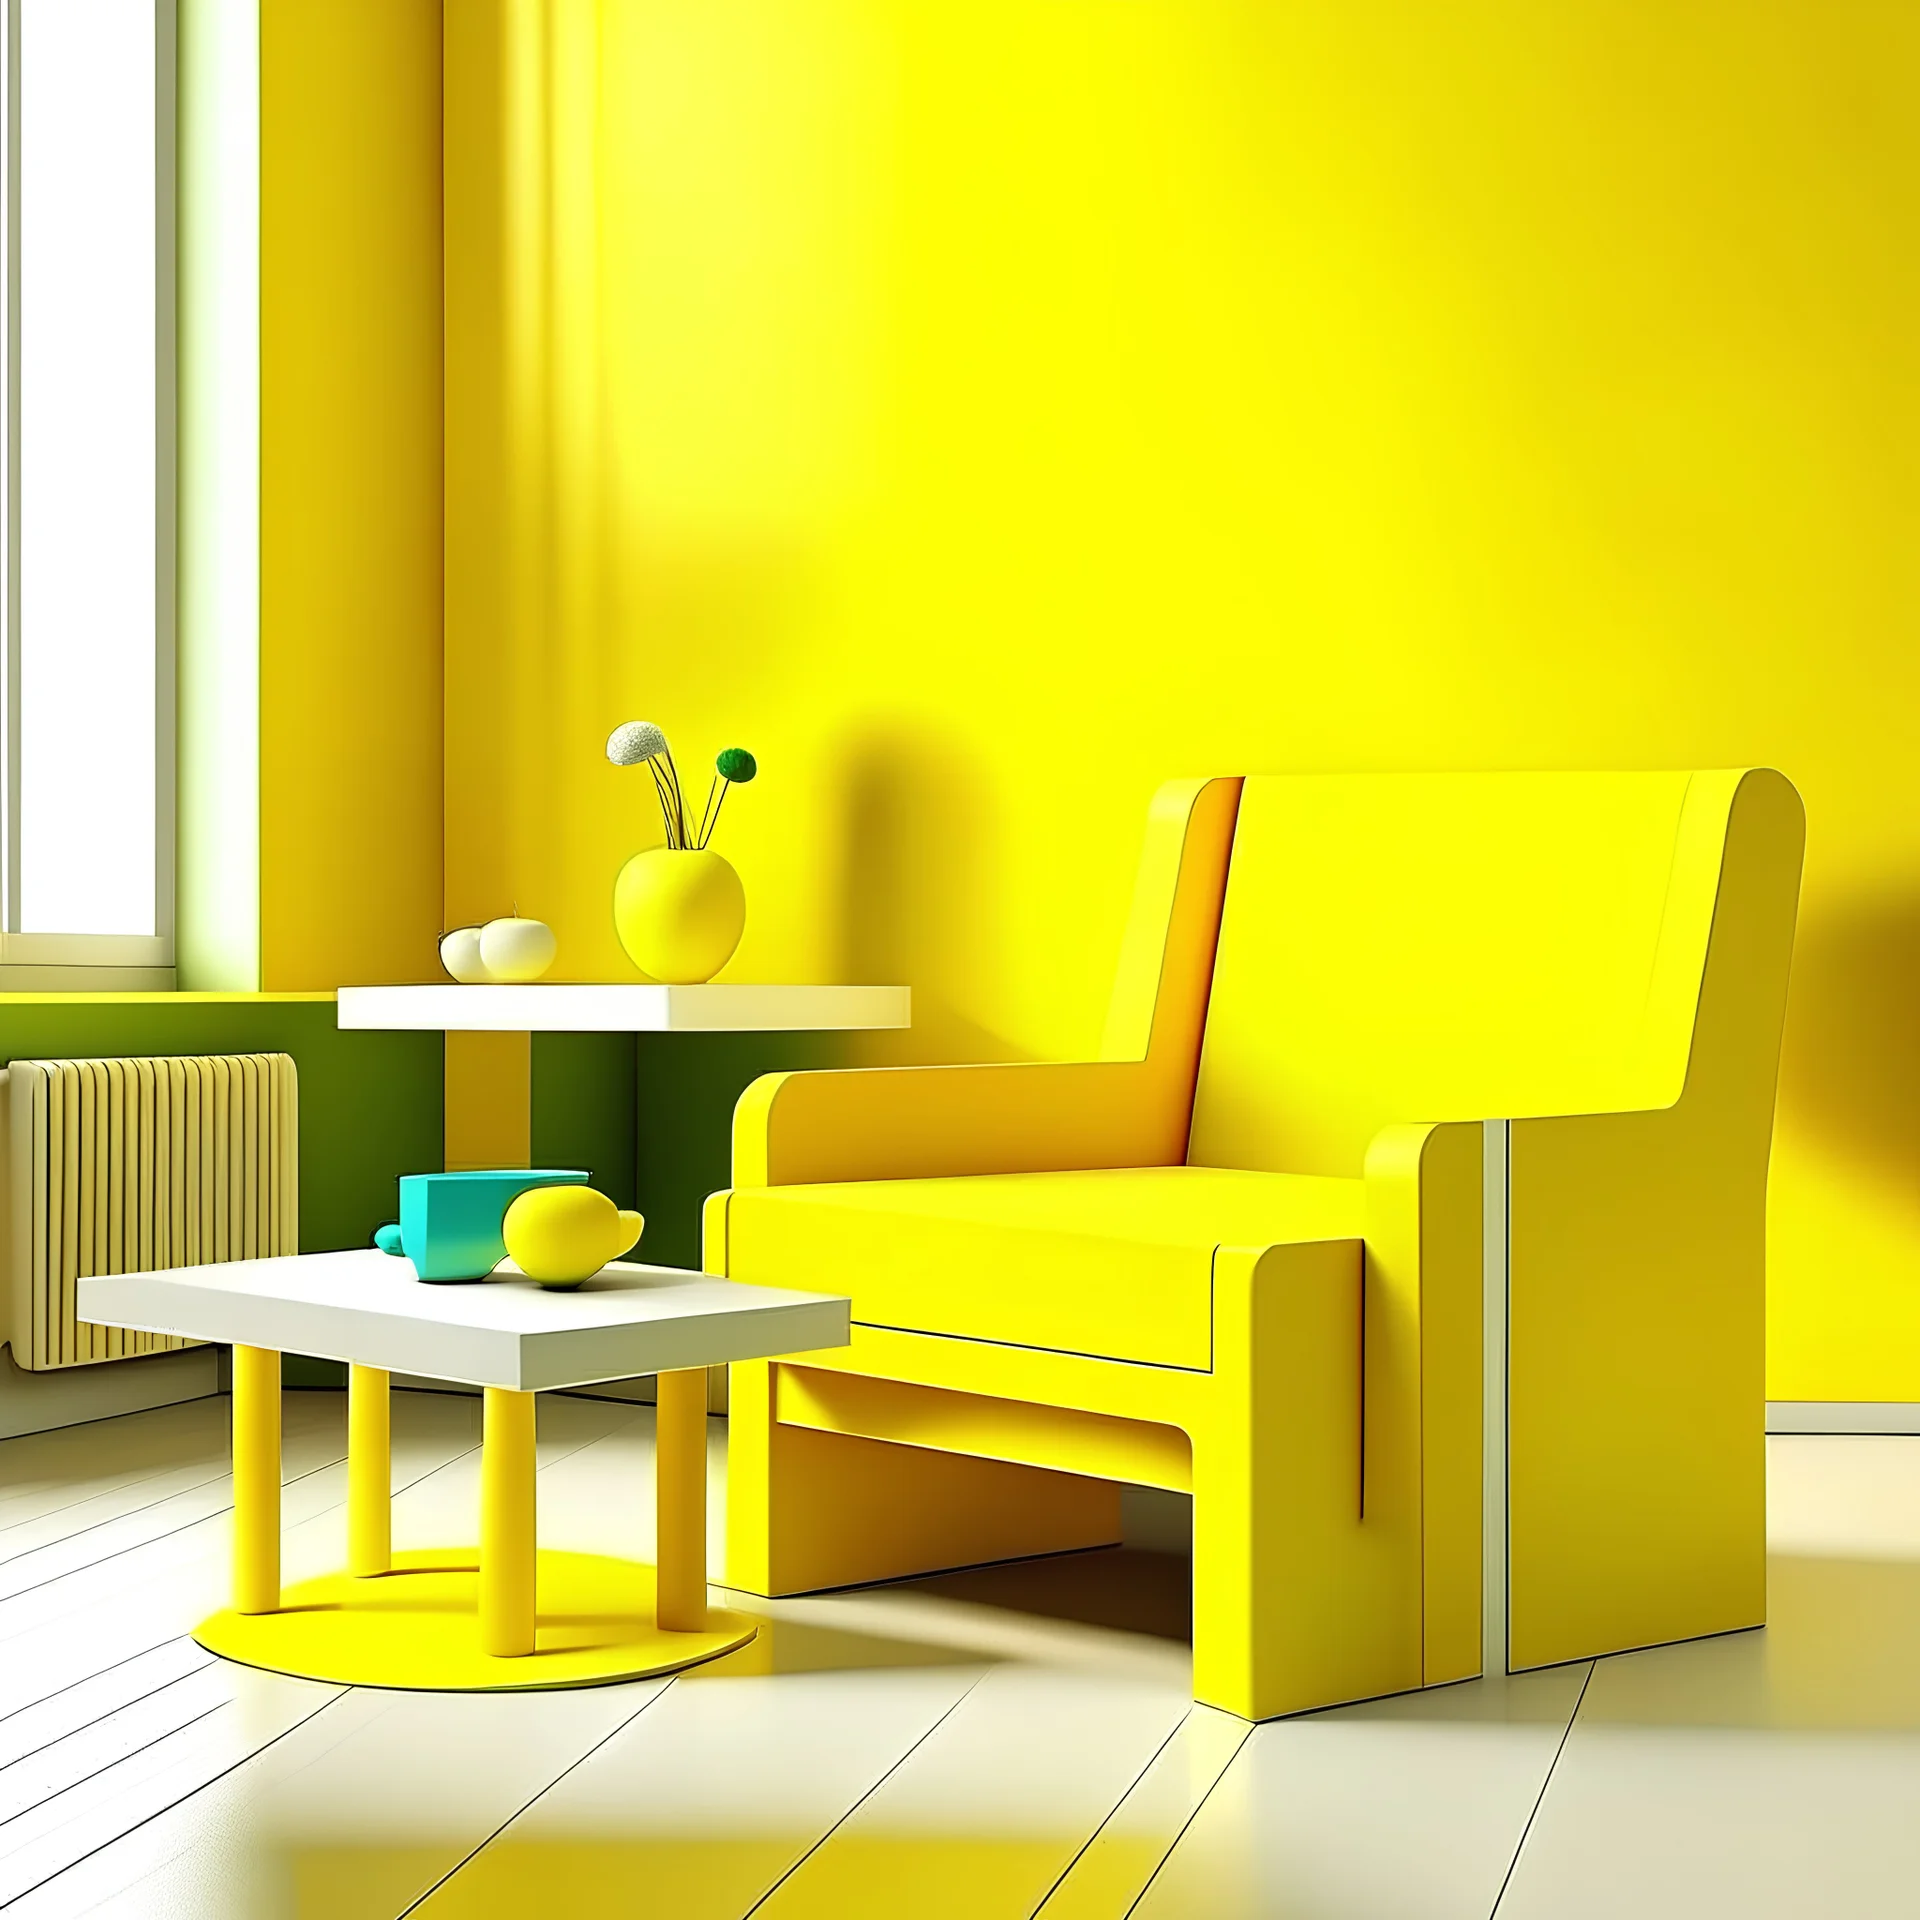 yellow color scheme, minimalist style